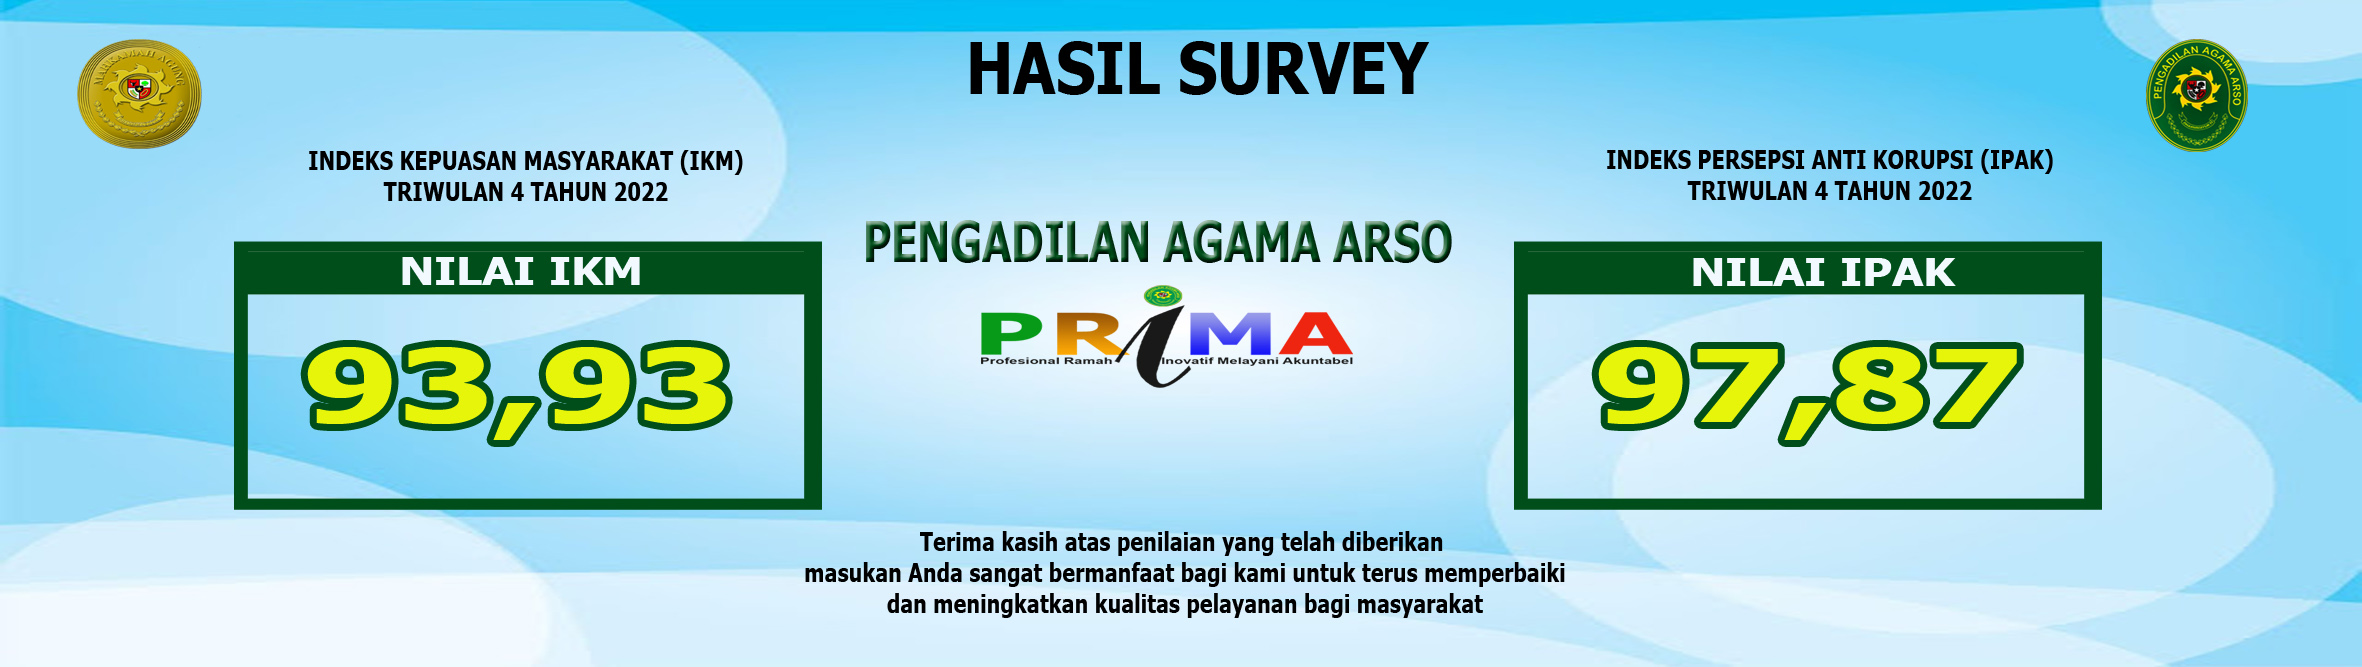 survey_copy.jpg